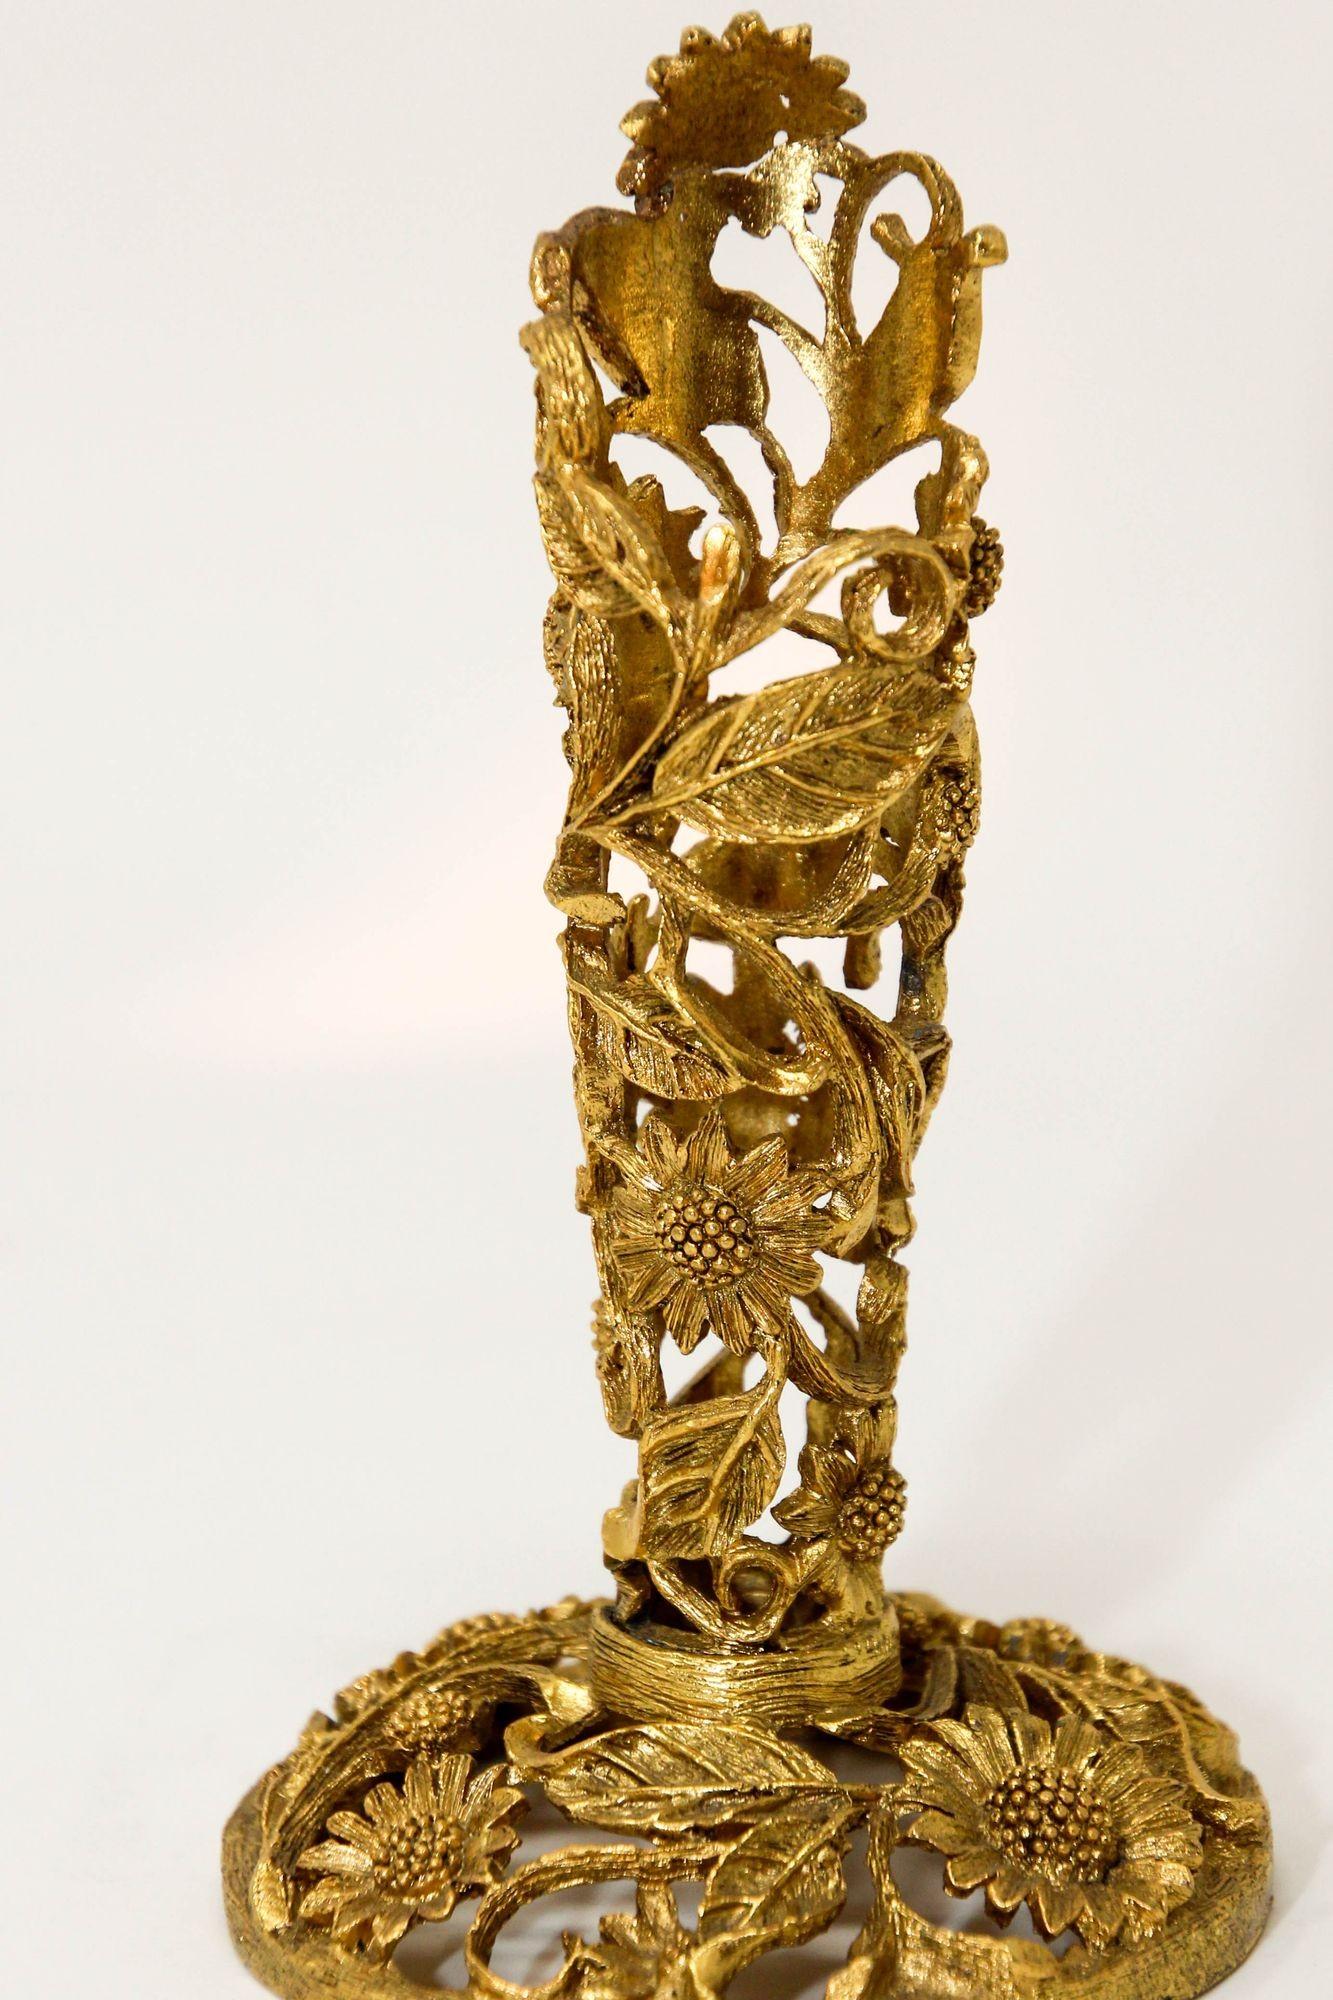 Vintage Matson1960s Ormolu Gold Tone Metal Filigree Knospe Glas Vase Halter.
Schöner goldfarbener filigraner Vasenhalter aus Metall oder Ormolu.
Diese schöne Vintage Ormolu Matson 24K vergoldet floral filigranen Stand ist aus den späten 1940er